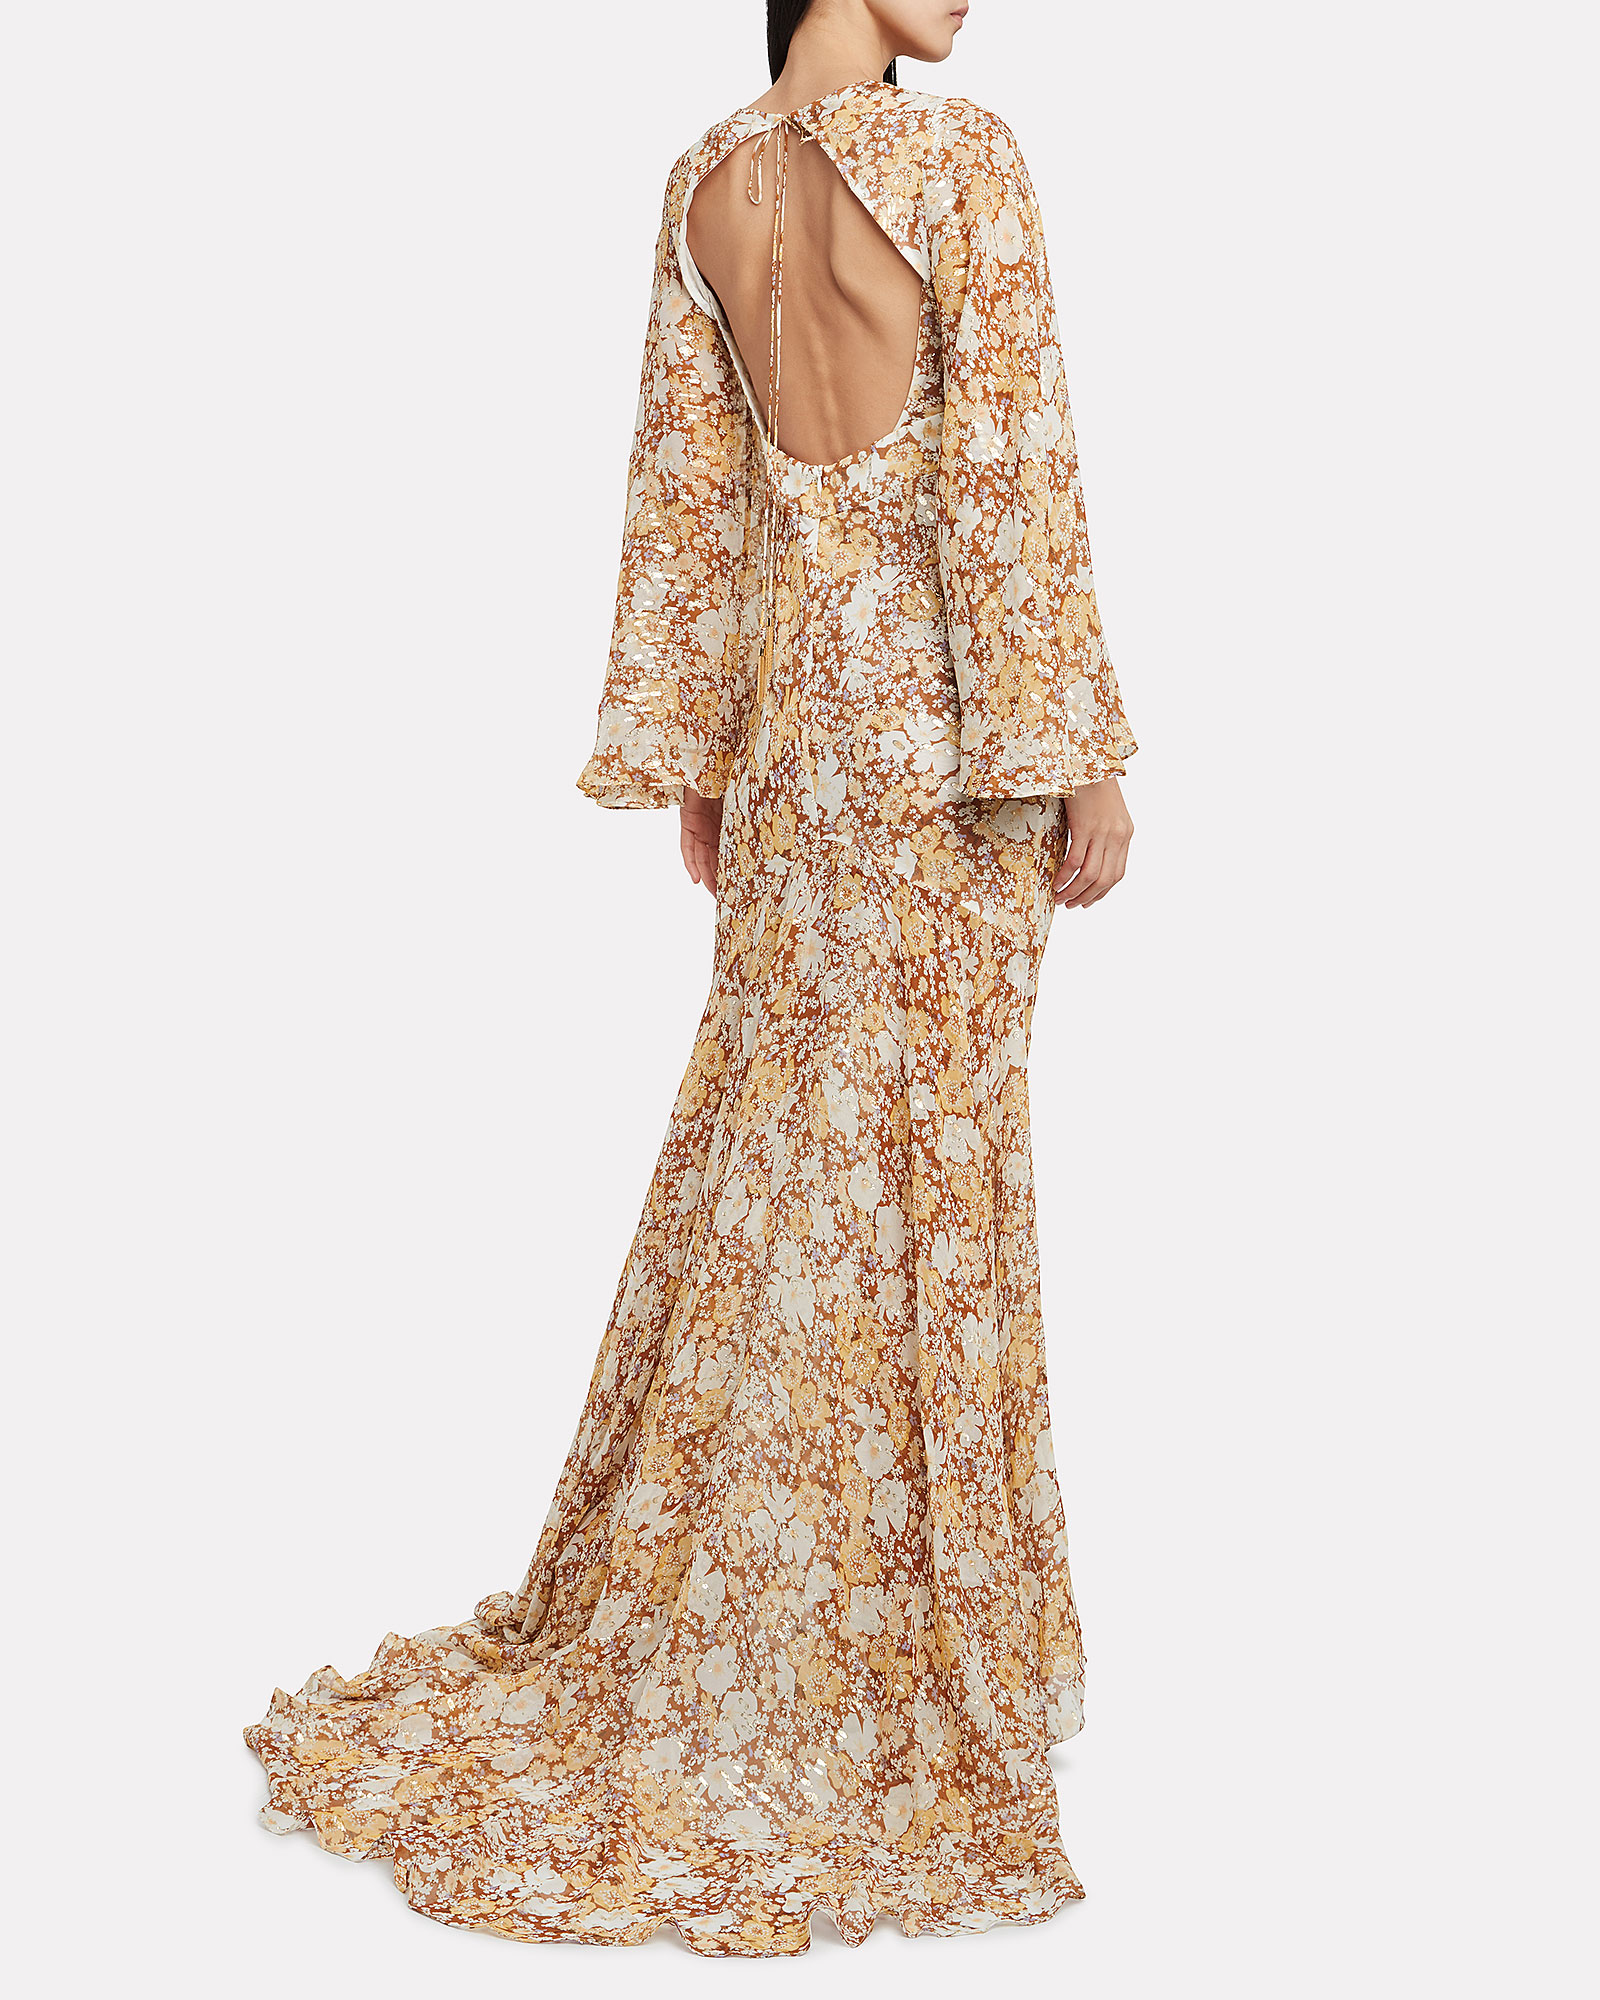 Shona Joy | Florence Silk-Lurex Floral Dress | INTERMIX®